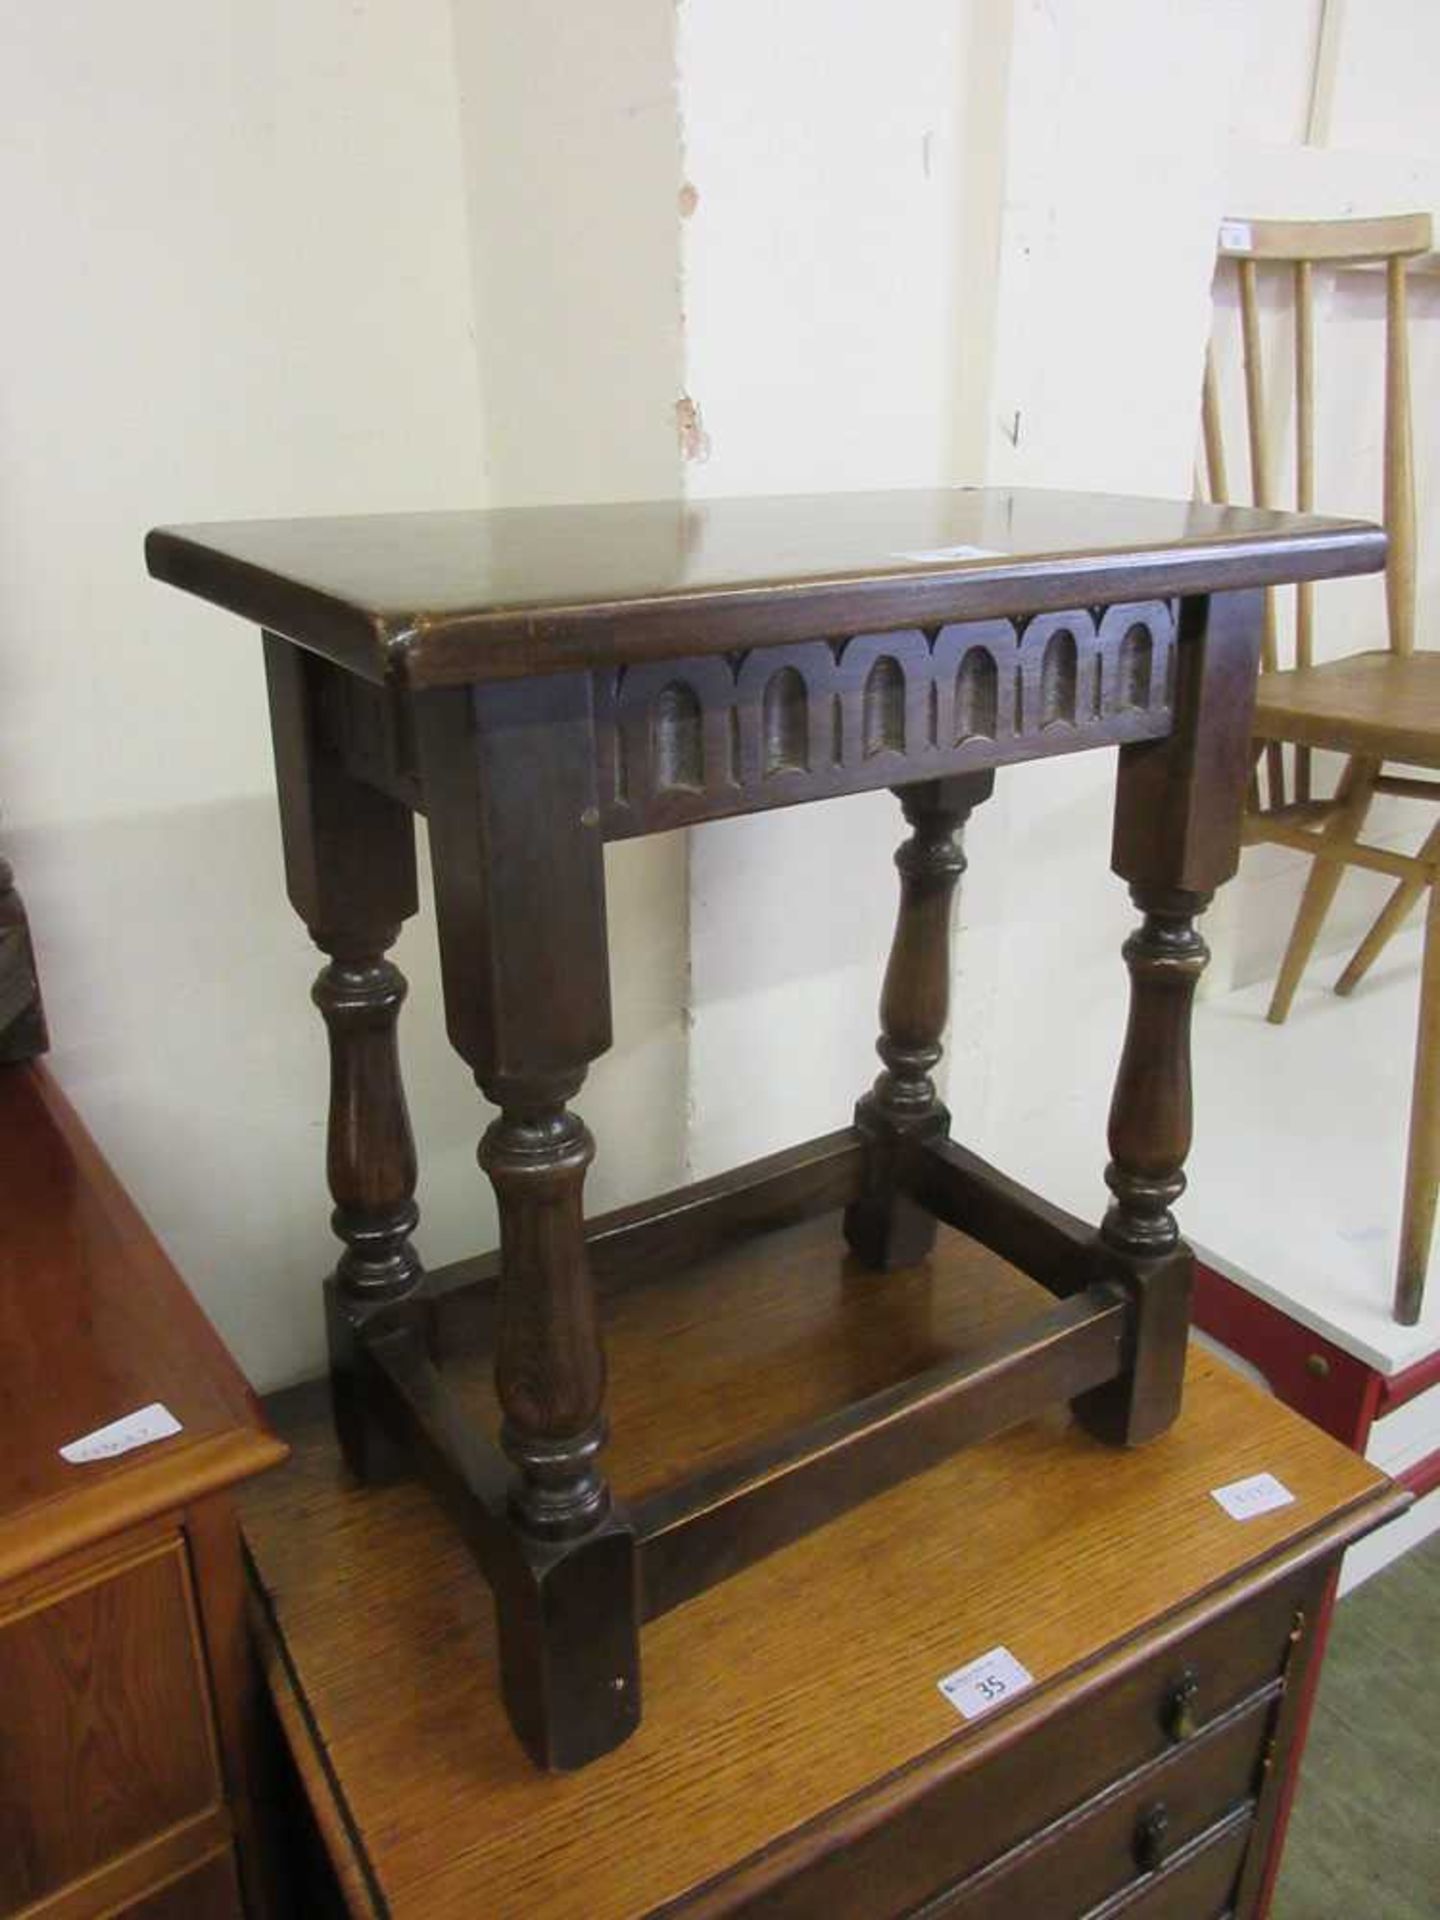 An oak joint stool